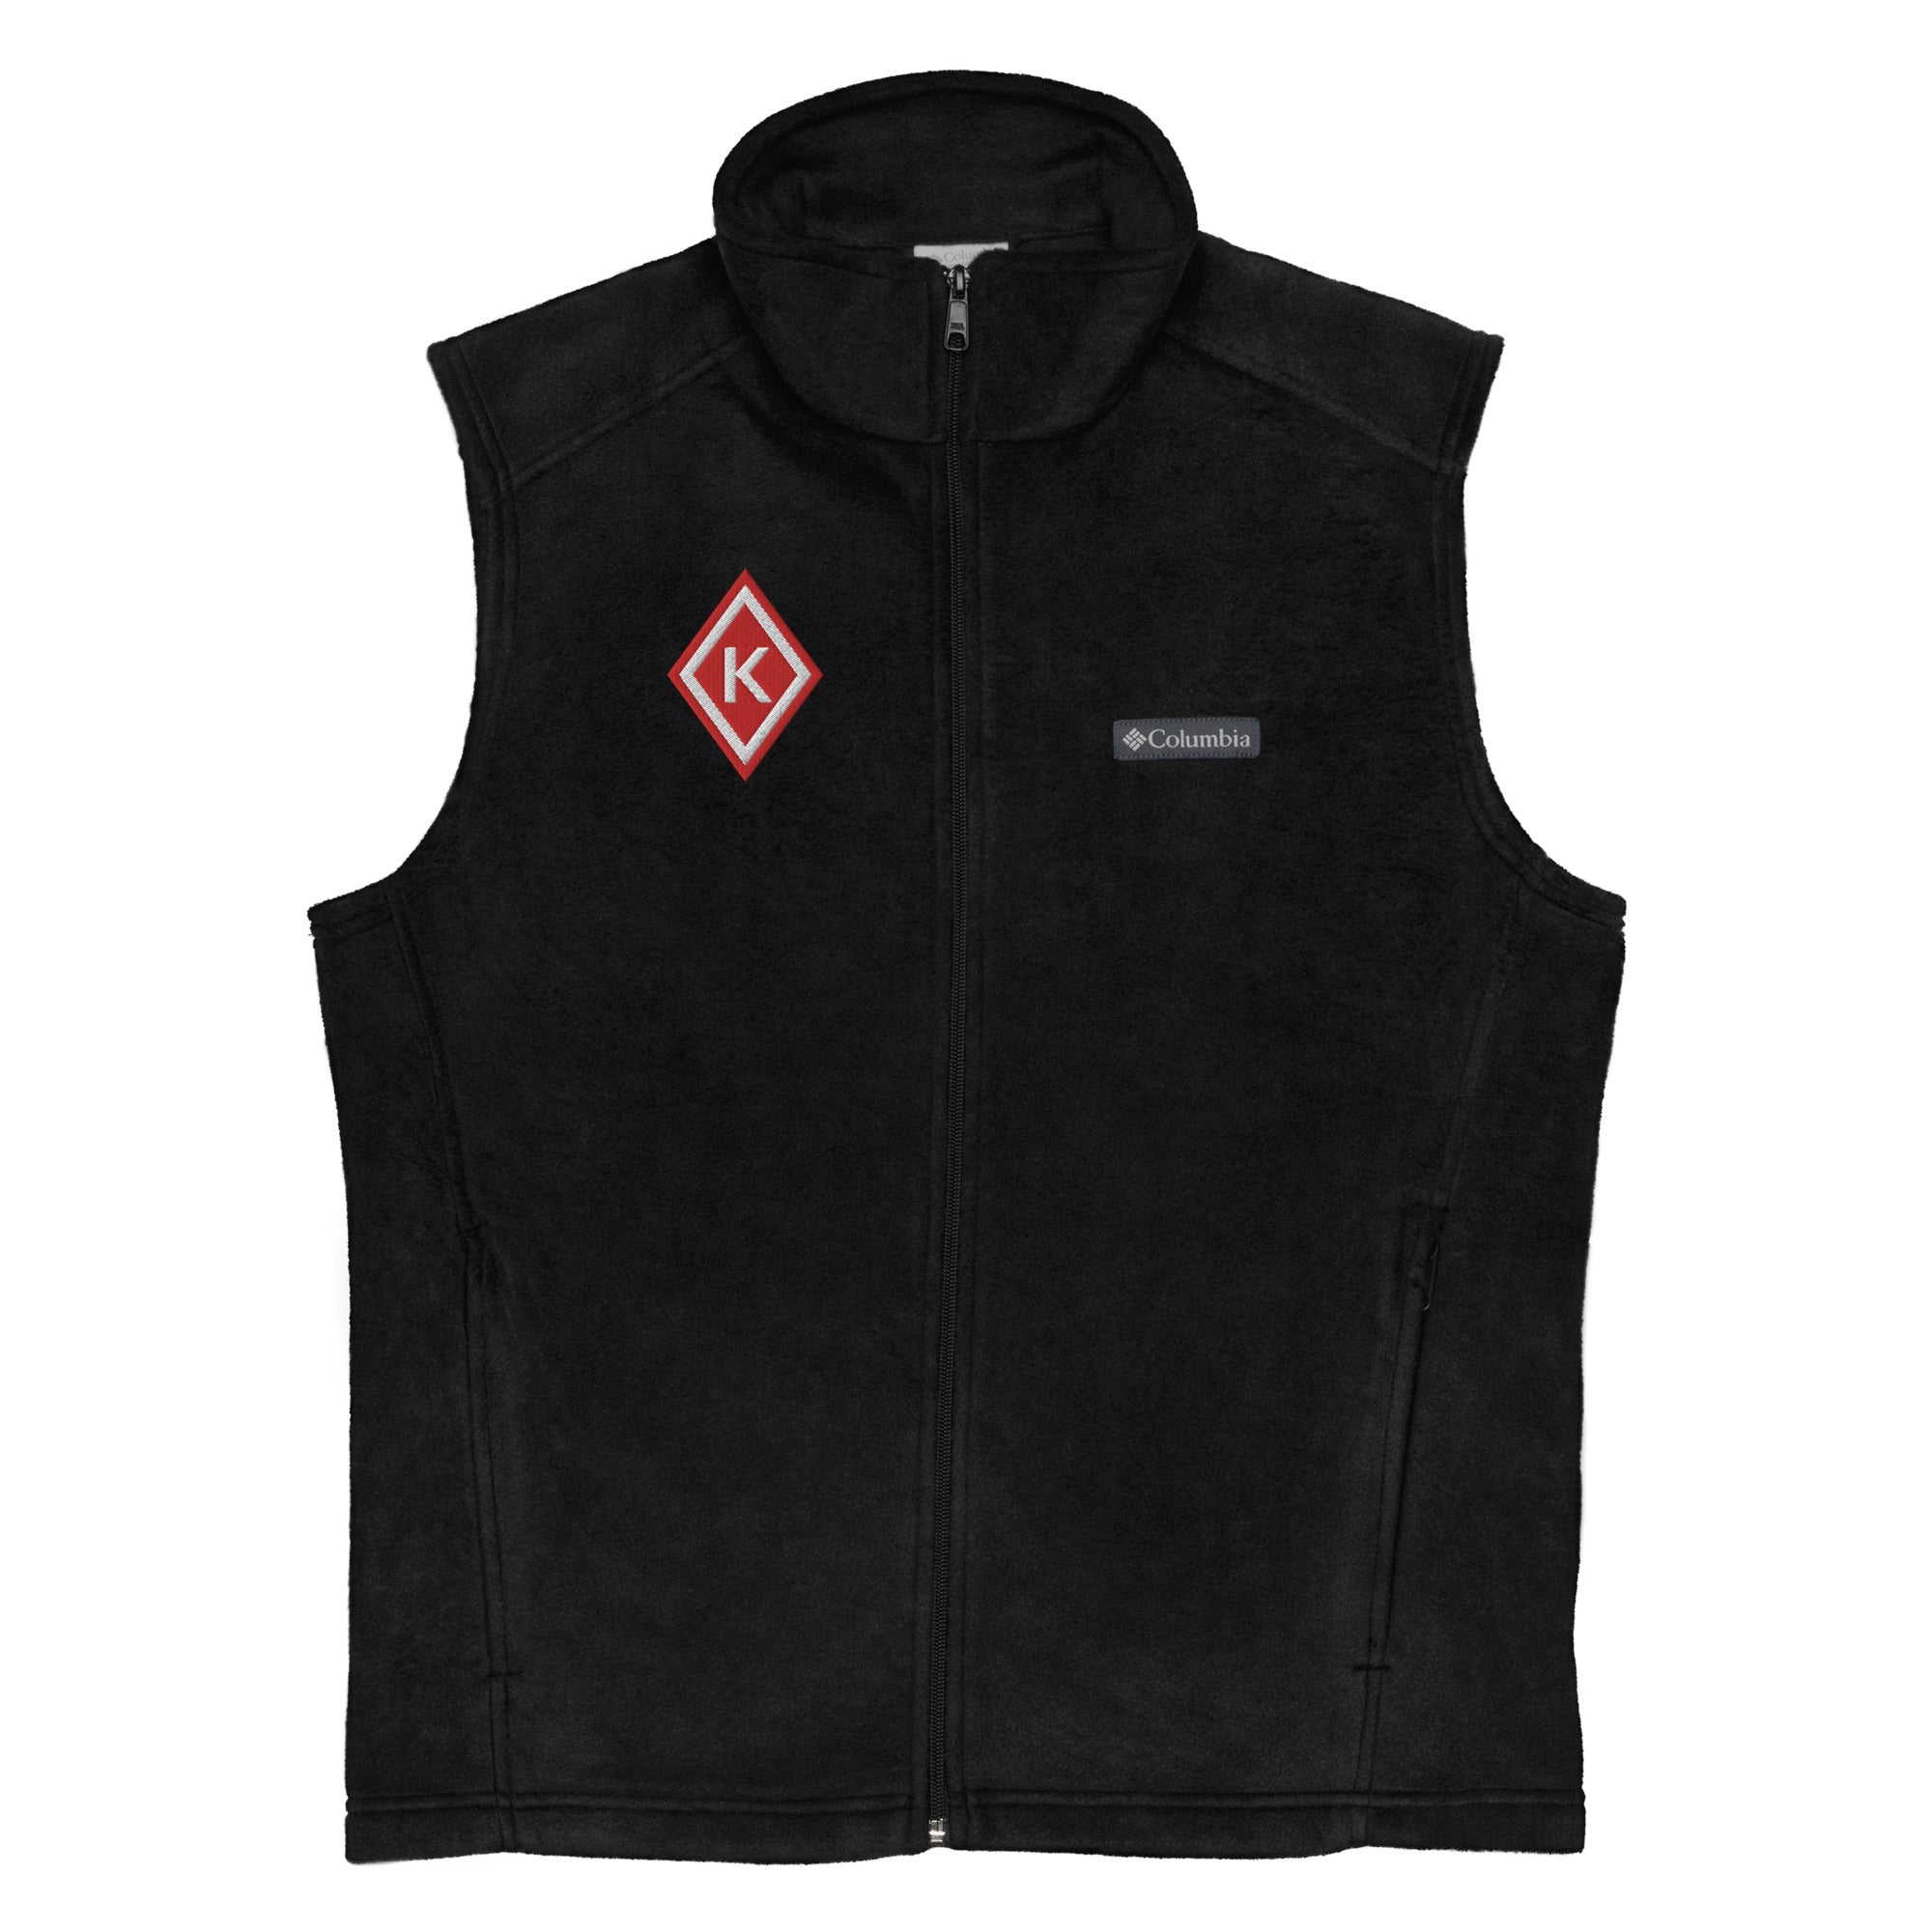 Kappa Diamond Columbia fleece vest